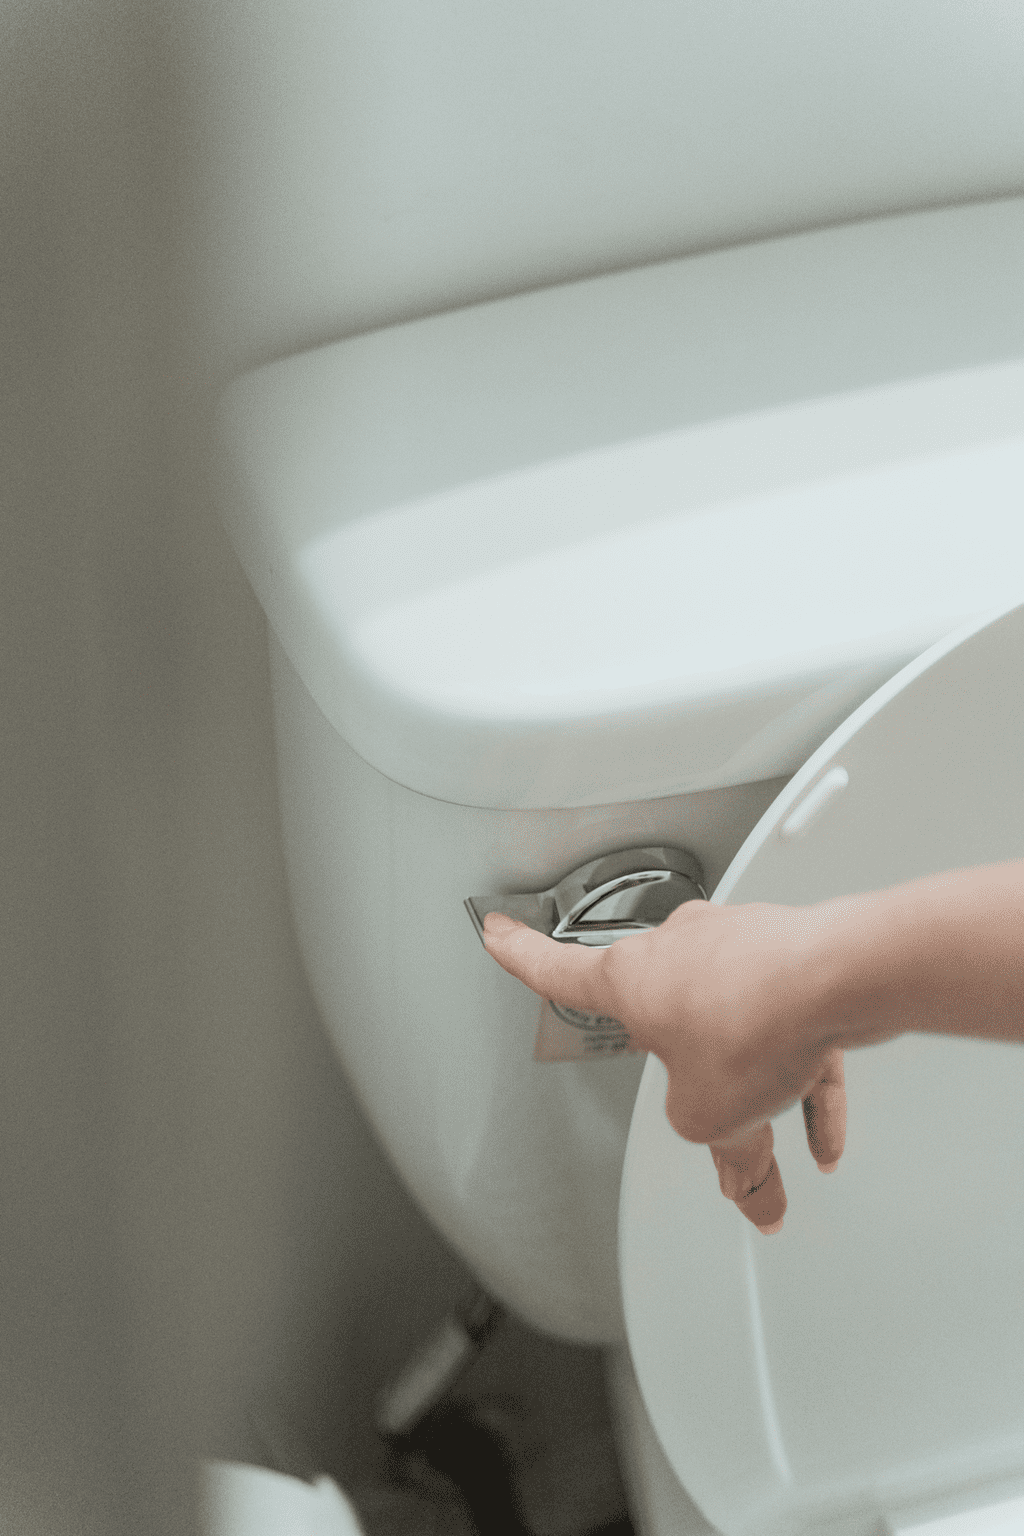 A hand flushing a toilet: https://www.pexels.com/photo/hand-flushing-toilet-7622581/